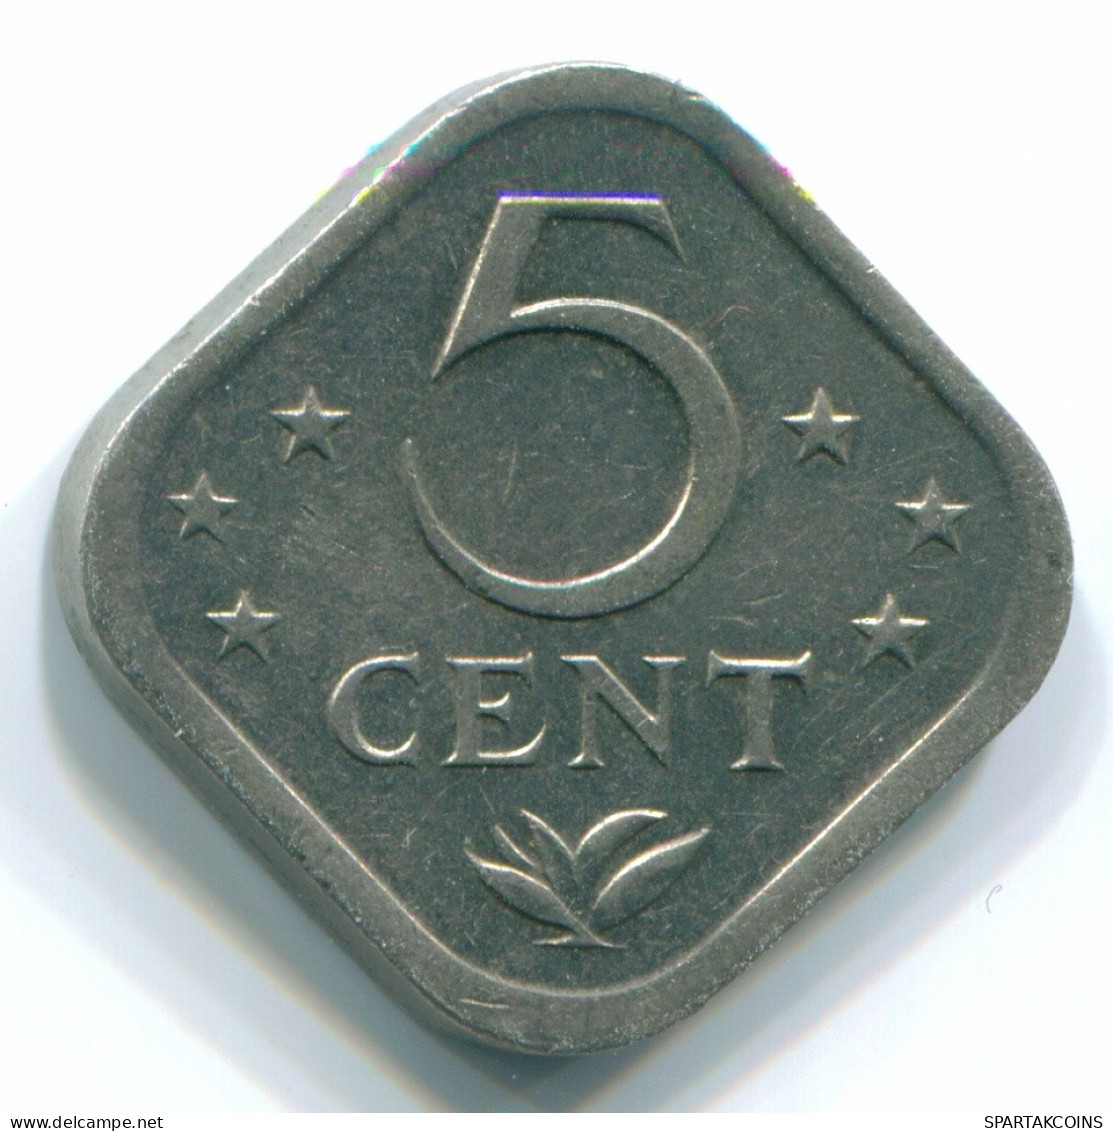 5 CENTS 1980 NIEDERLÄNDISCHE ANTILLEN Nickel Koloniale Münze #S12325.D.A - Nederlandse Antillen